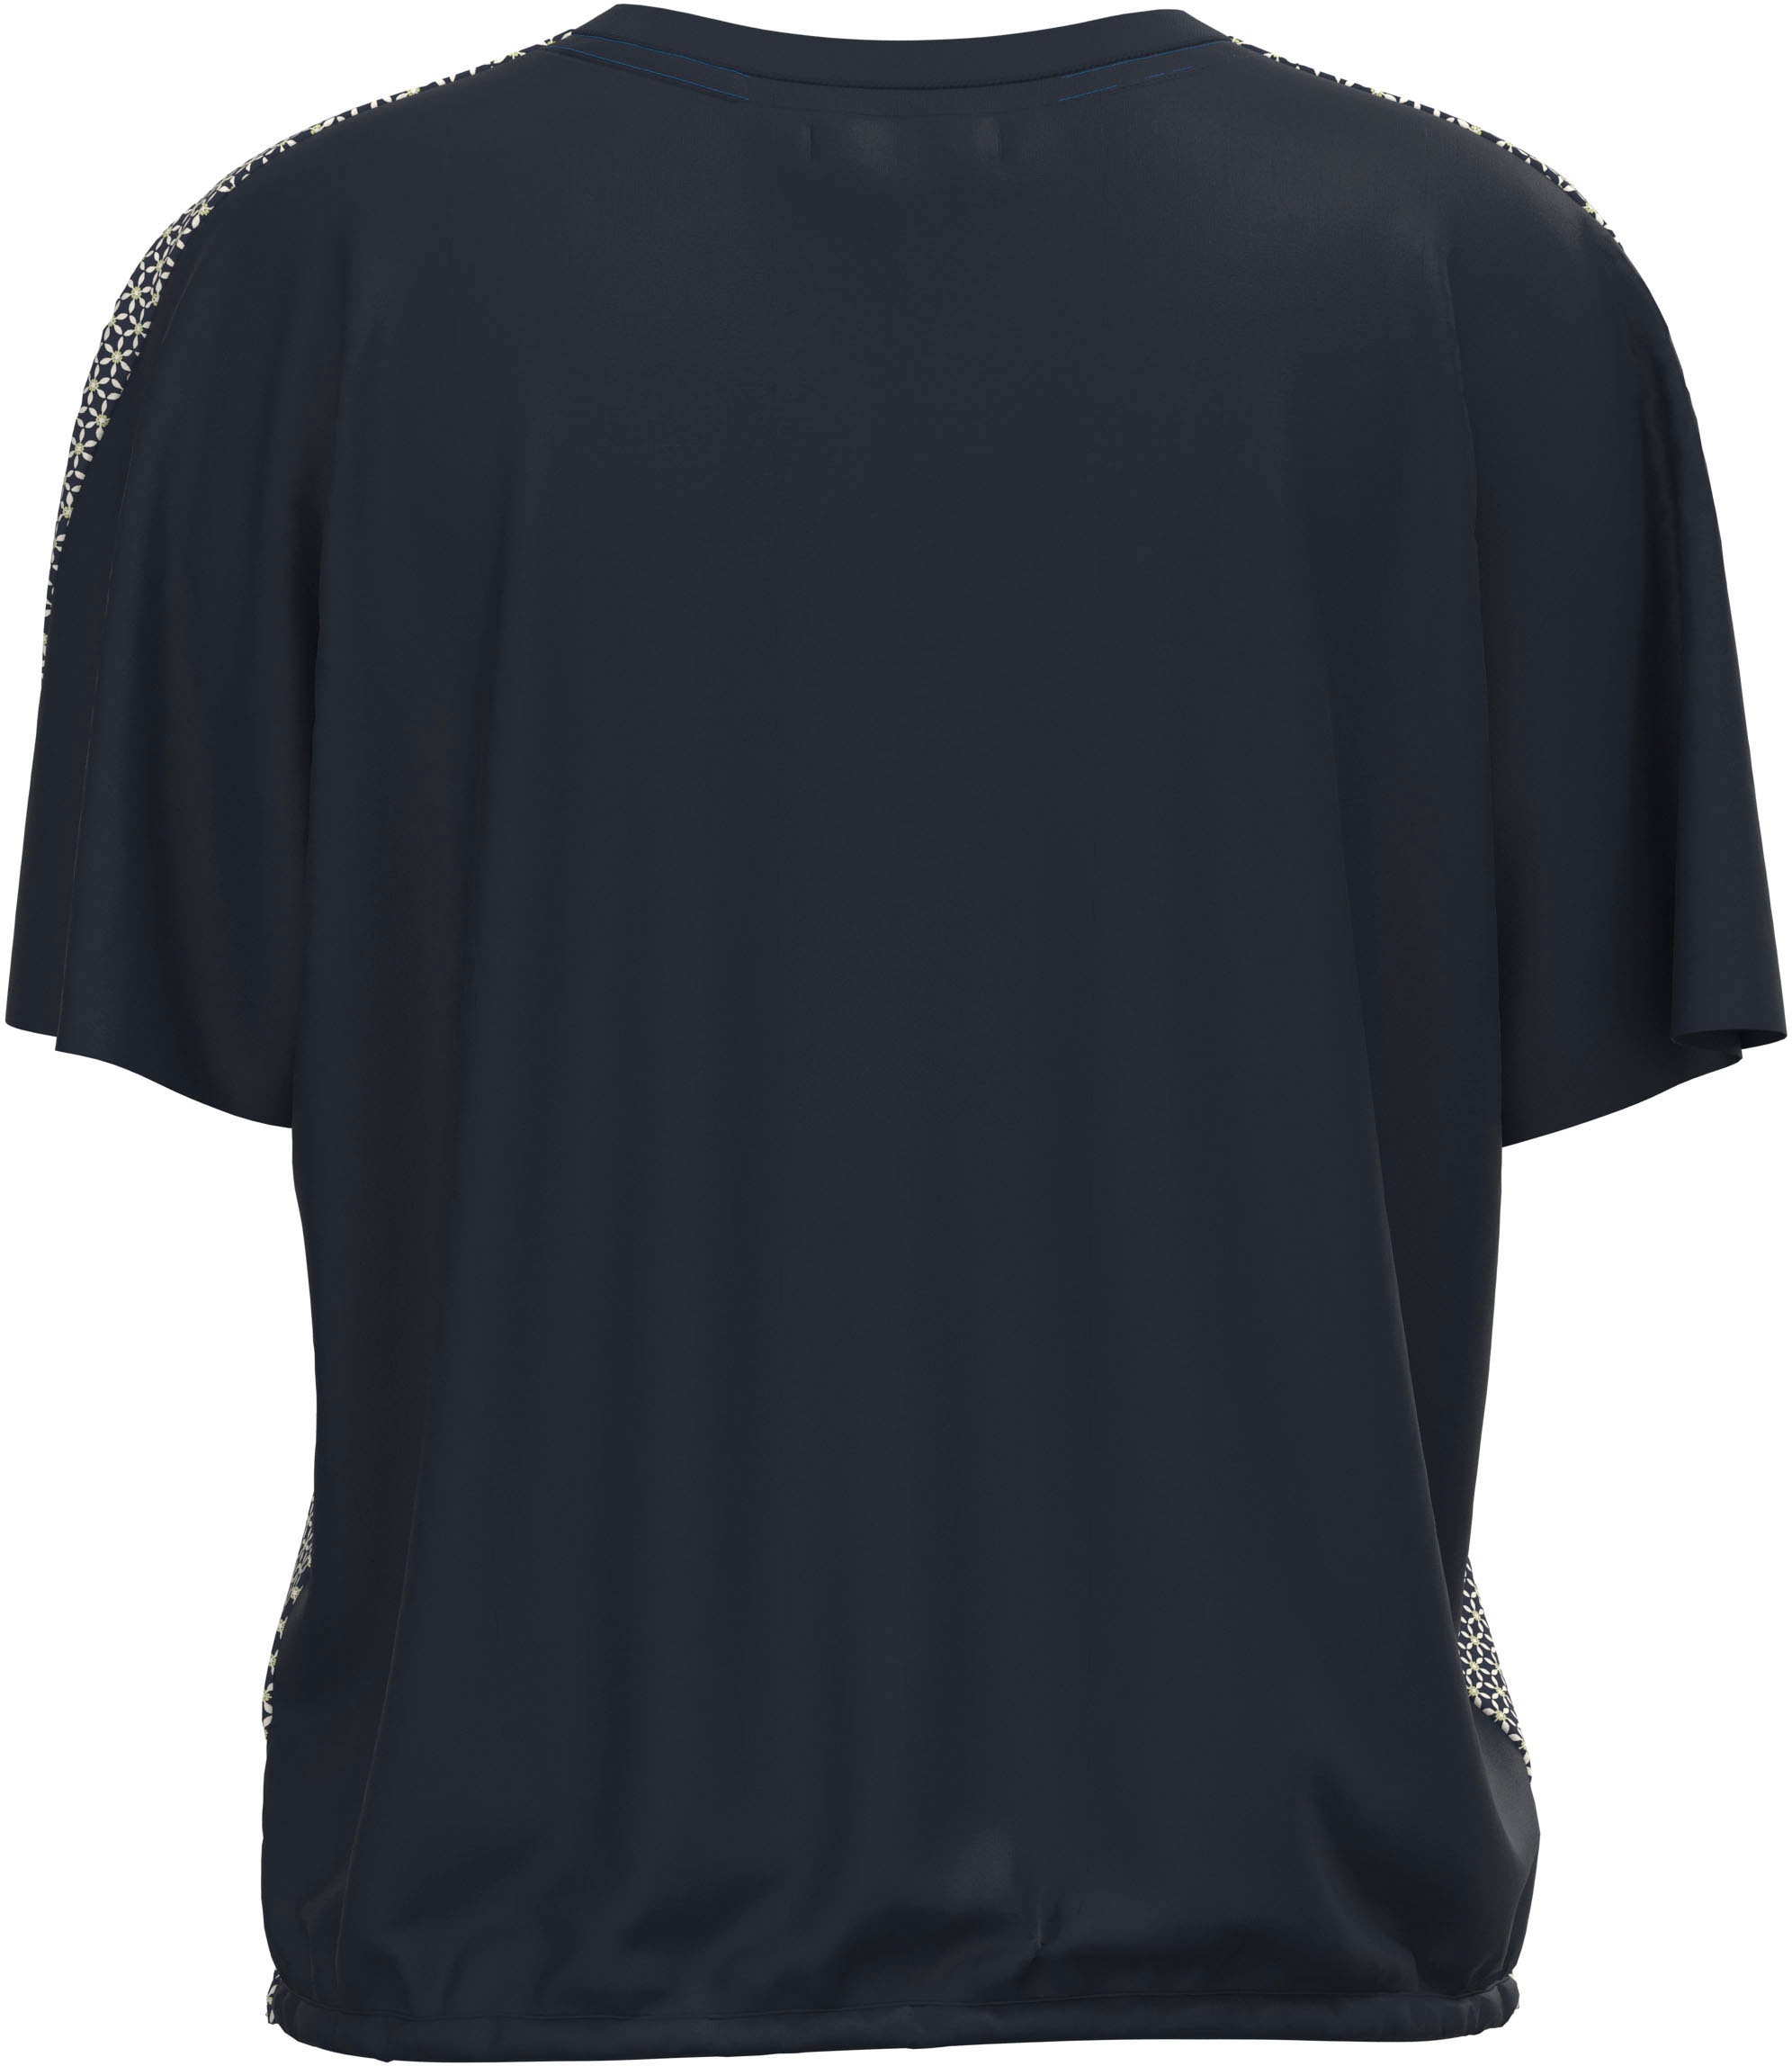 G-Star RAW T-Shirt »T-Shirt to«, kaufen Logo color vorne Grafikdruck block tank mti Lash